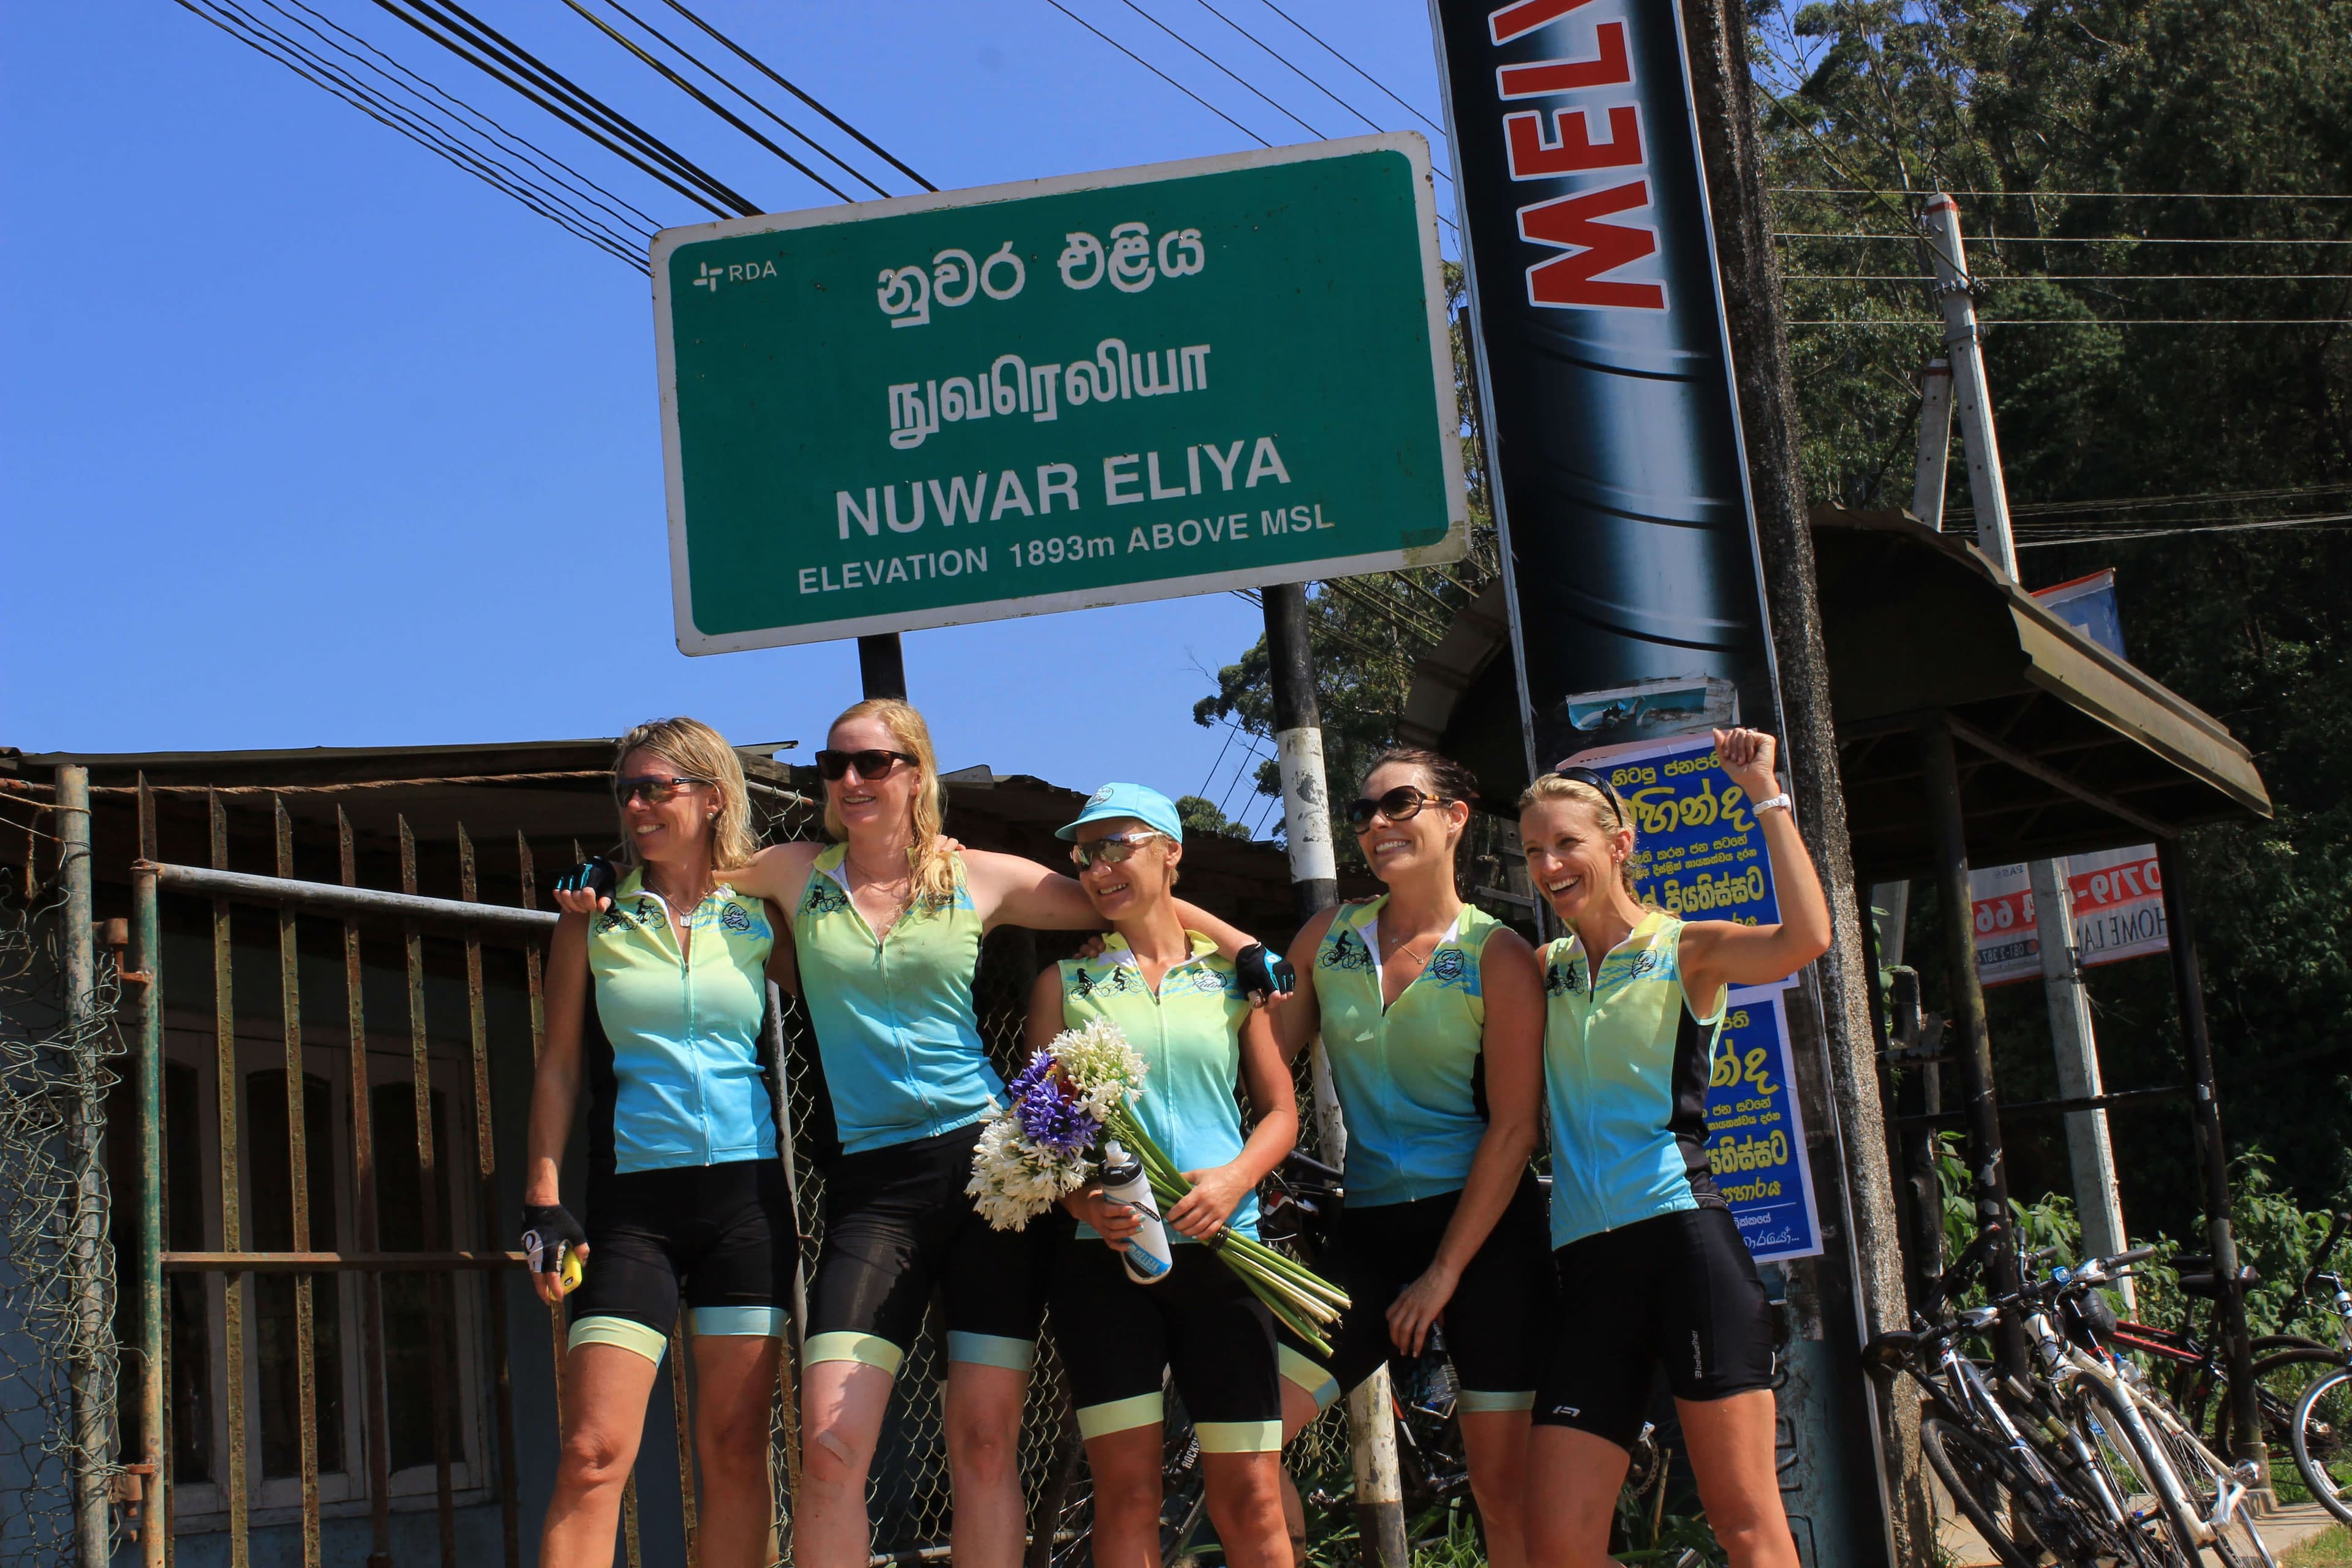 The moment of a cyclists group reached to Nuwara Eliya Sri Lanka